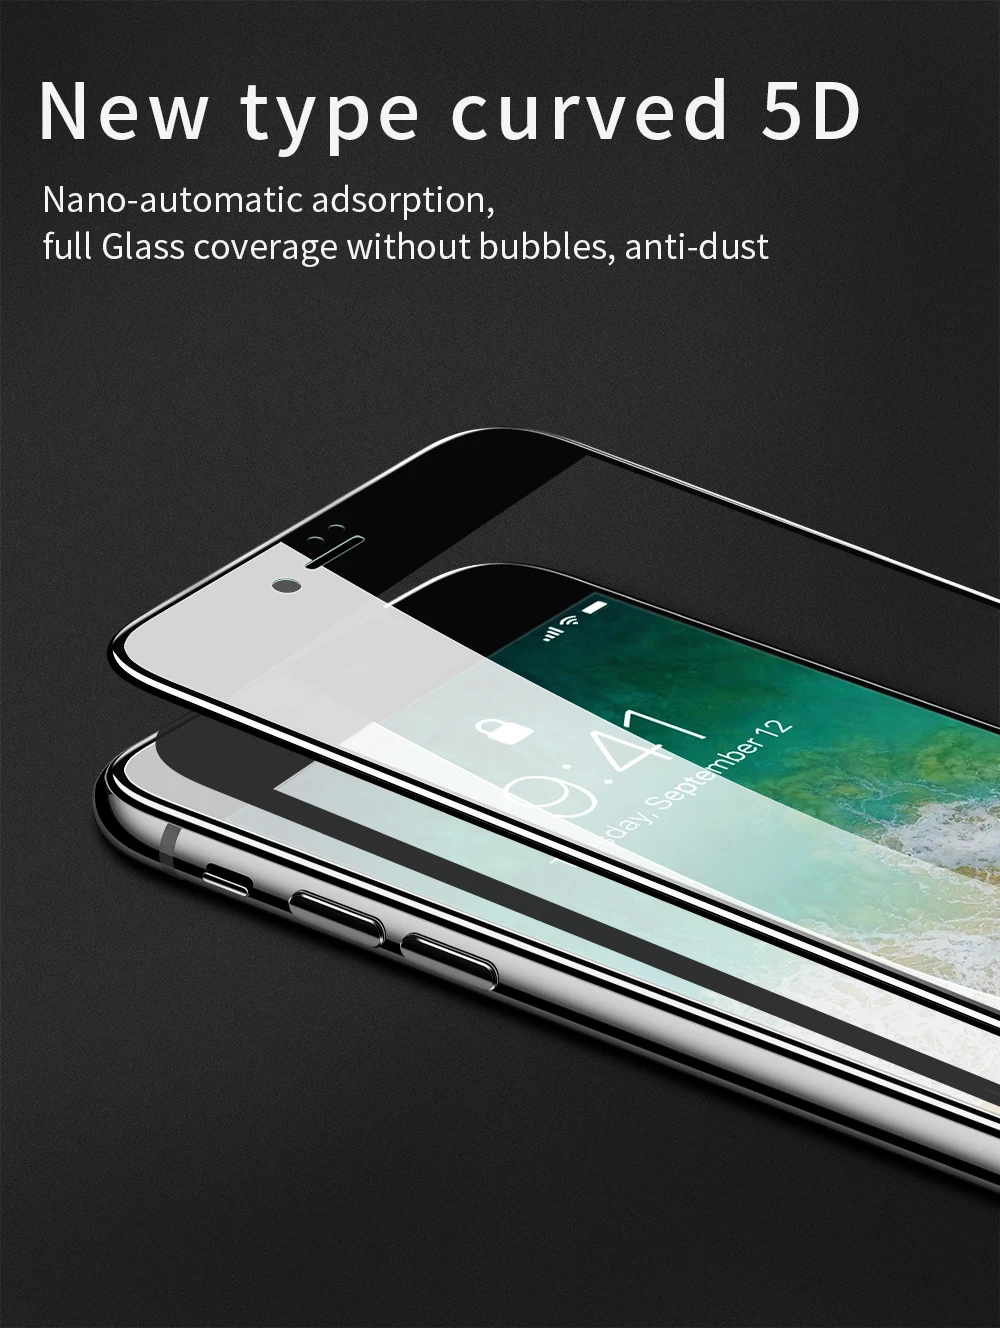 Защитная пленка для экрана Essager 5D для iPhone 8, 7, 6, 6 S, S Plus, 0,3 мм, переднее покрытие, закаленное стекло для iPhone 8 Plus, 7 plus, защита экрана